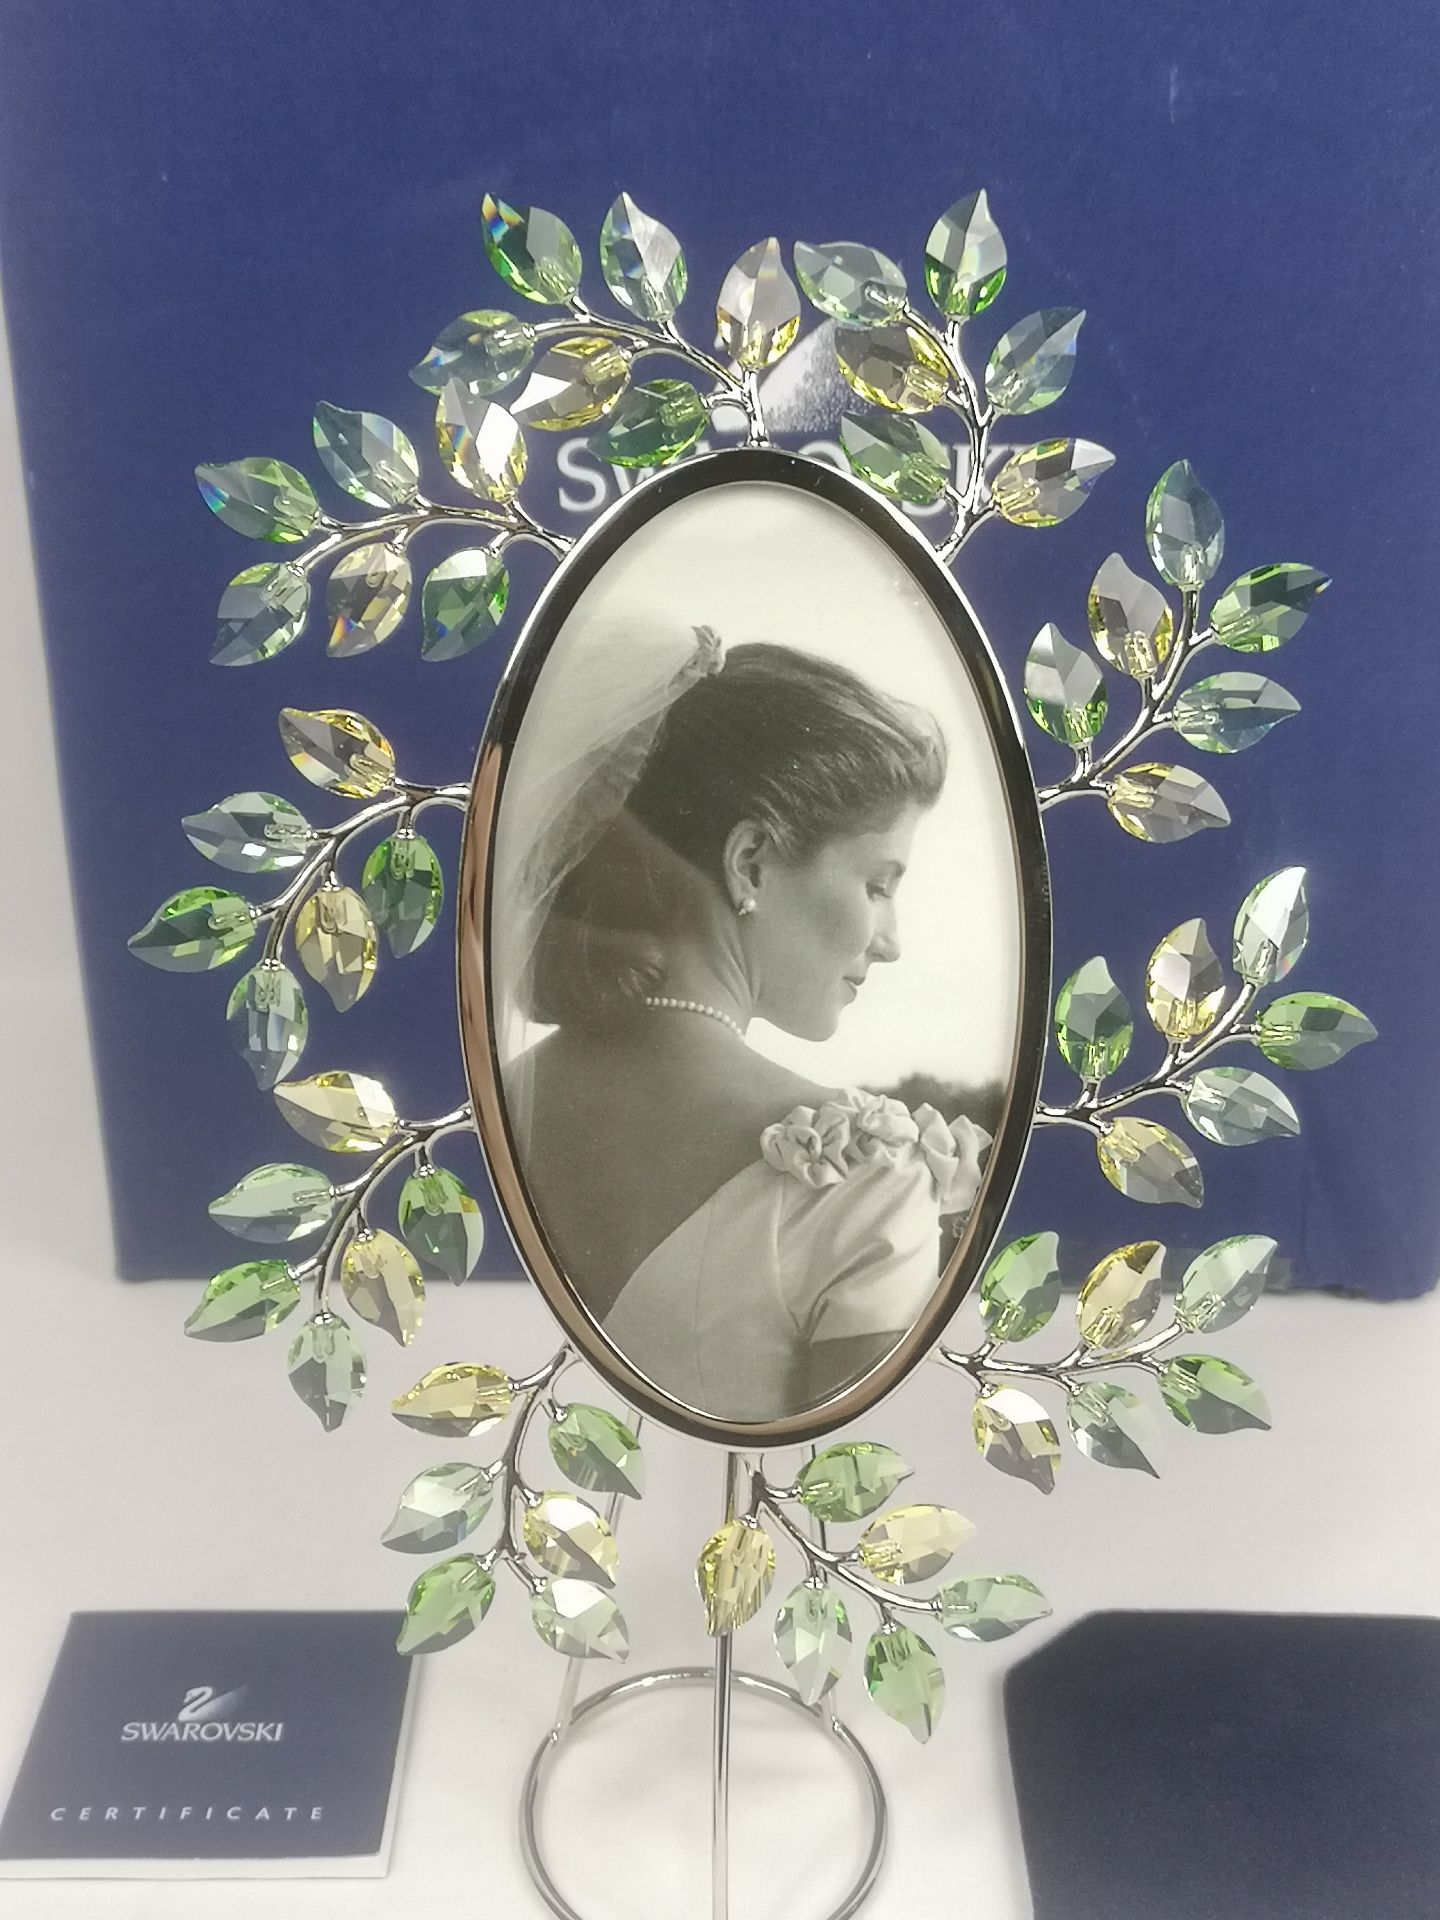 Boxed swarovski crystal photo frame - Image 3 of 4